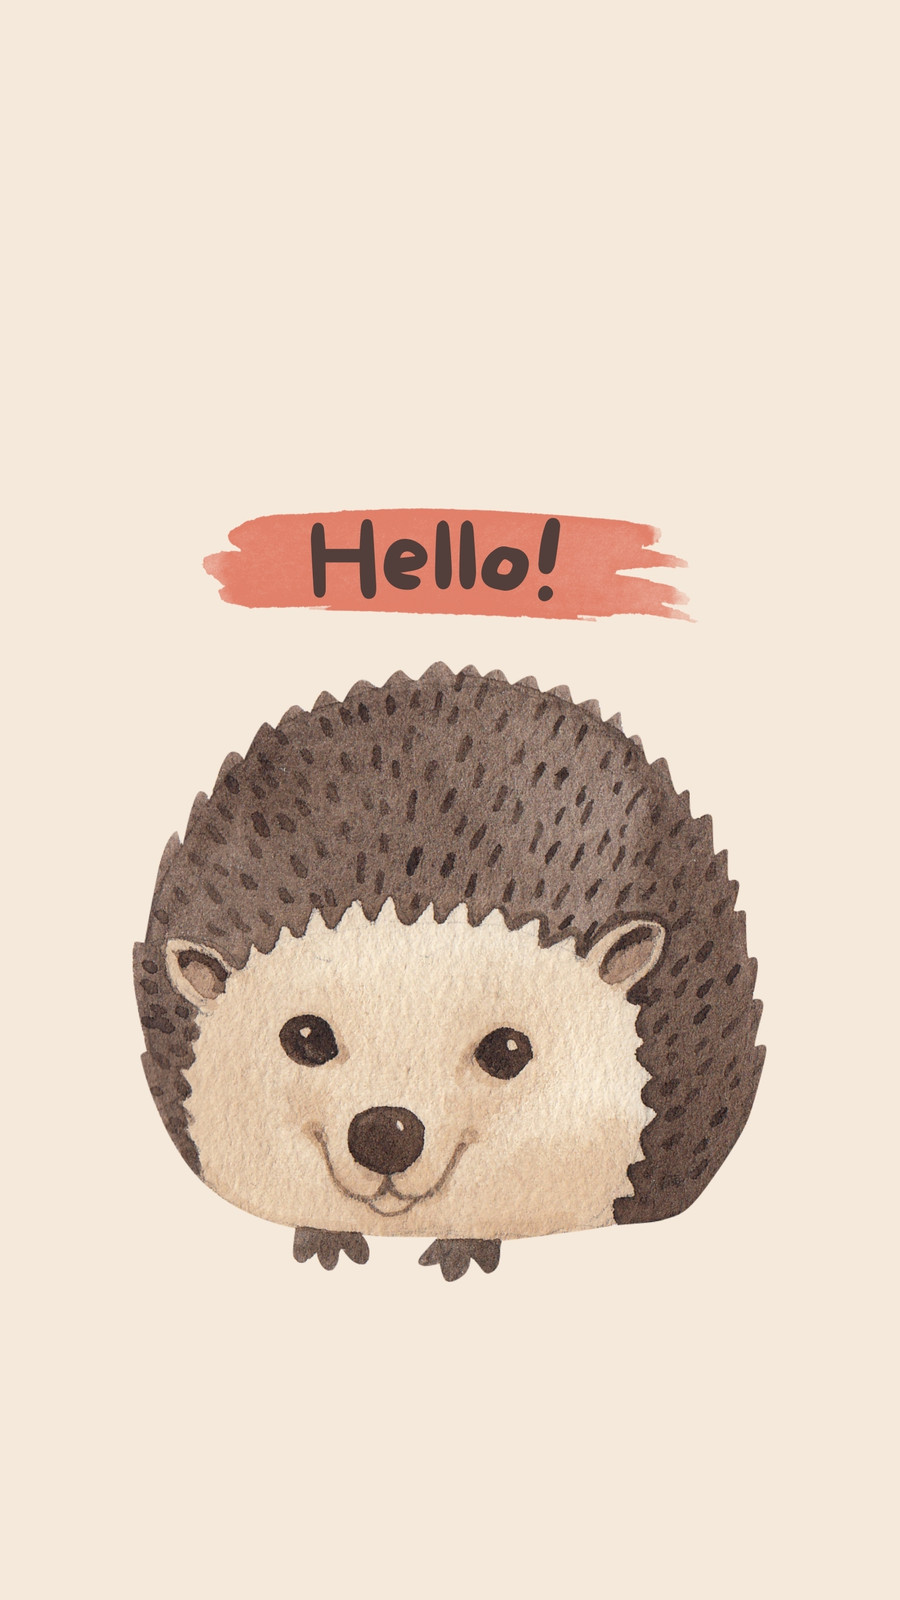 Hedgehog Sleep Cartoon Background Seamless Wallpaper Stock Vector -  Illustration of pattern, bristle: 127676145